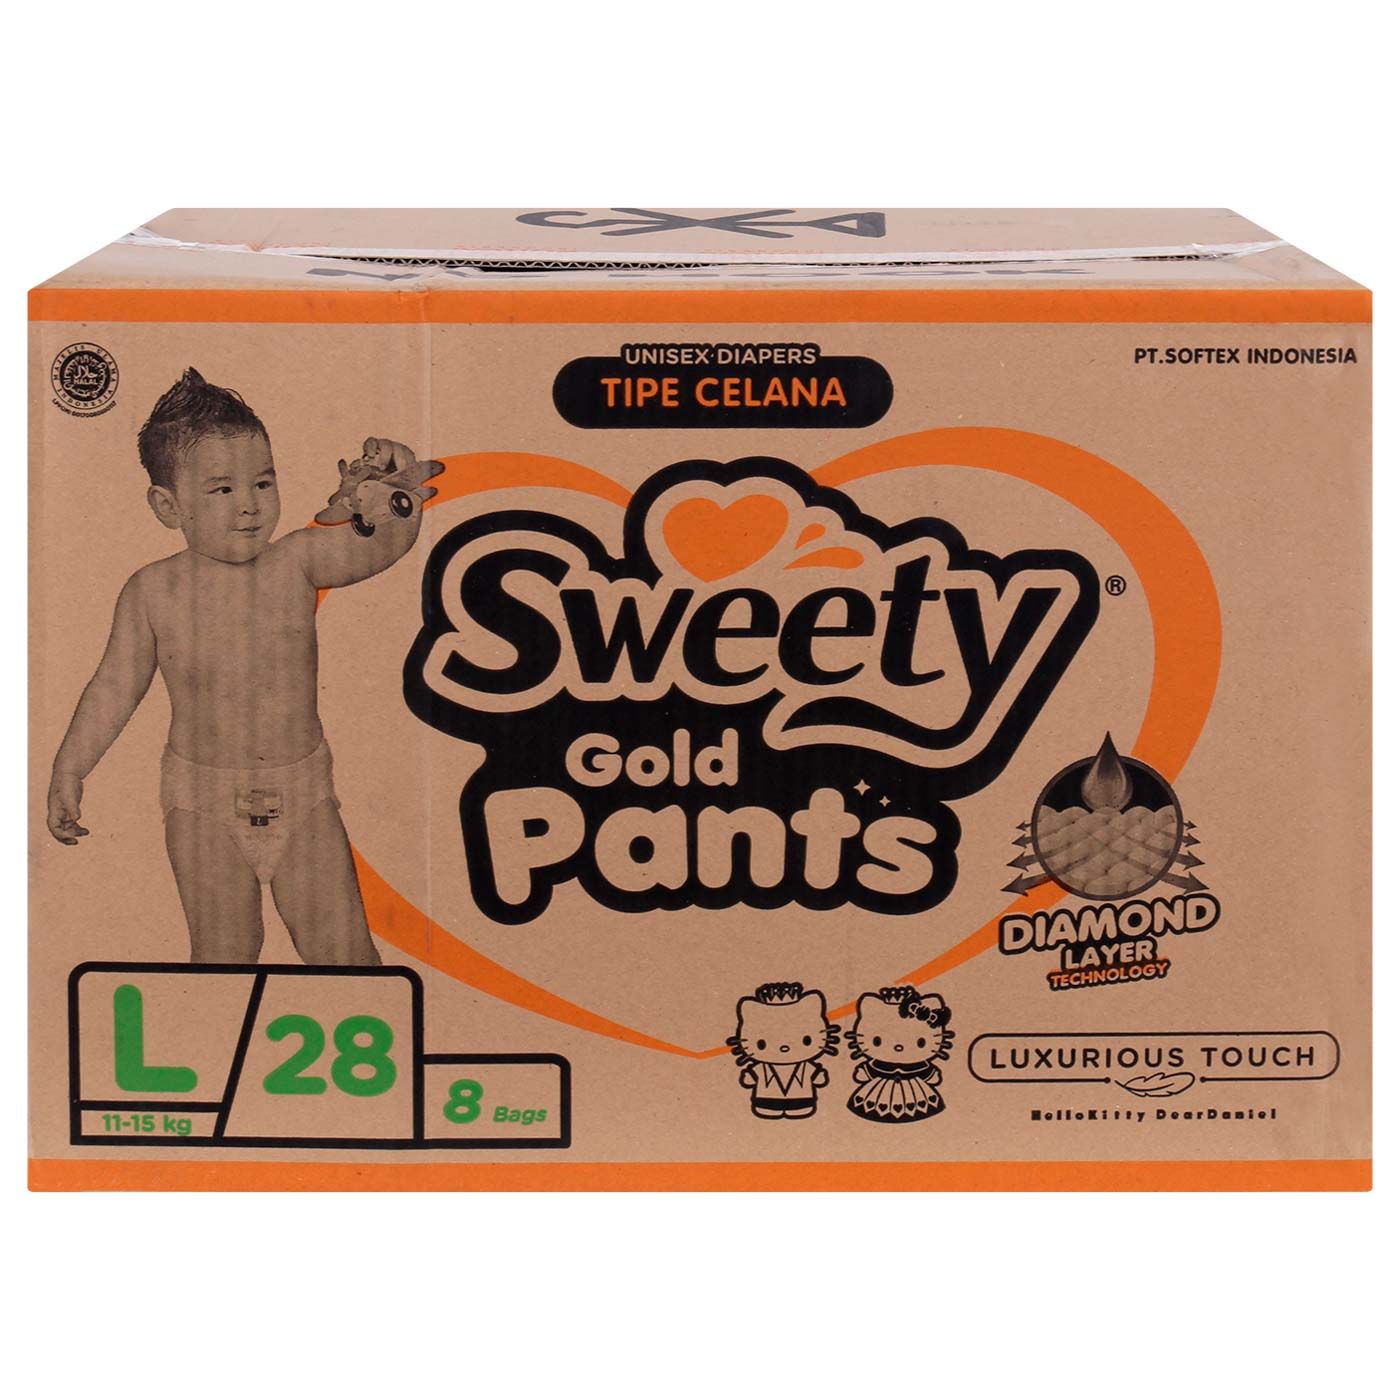 Sweety Pantz Gold Regular Pack L 28 - 4